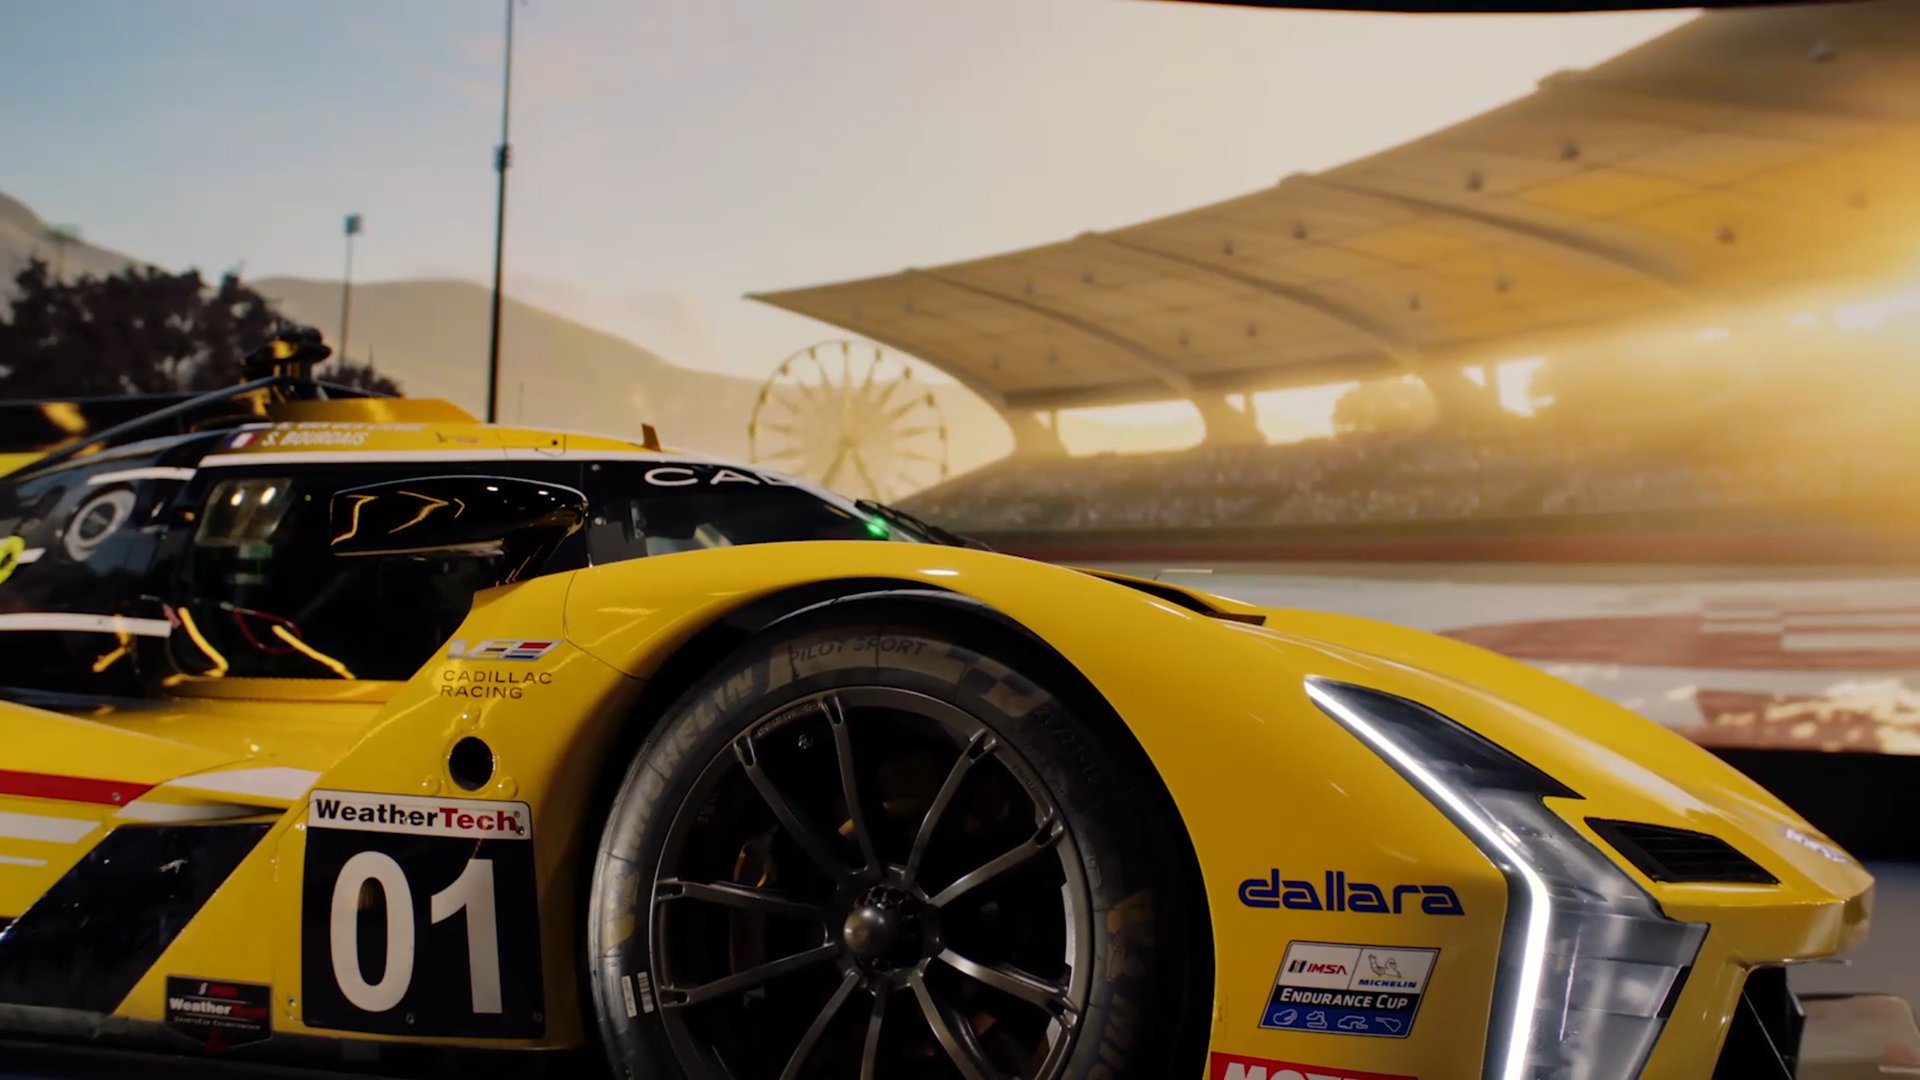 Forza Motorsport: Veja os carros da capa do game de corrida